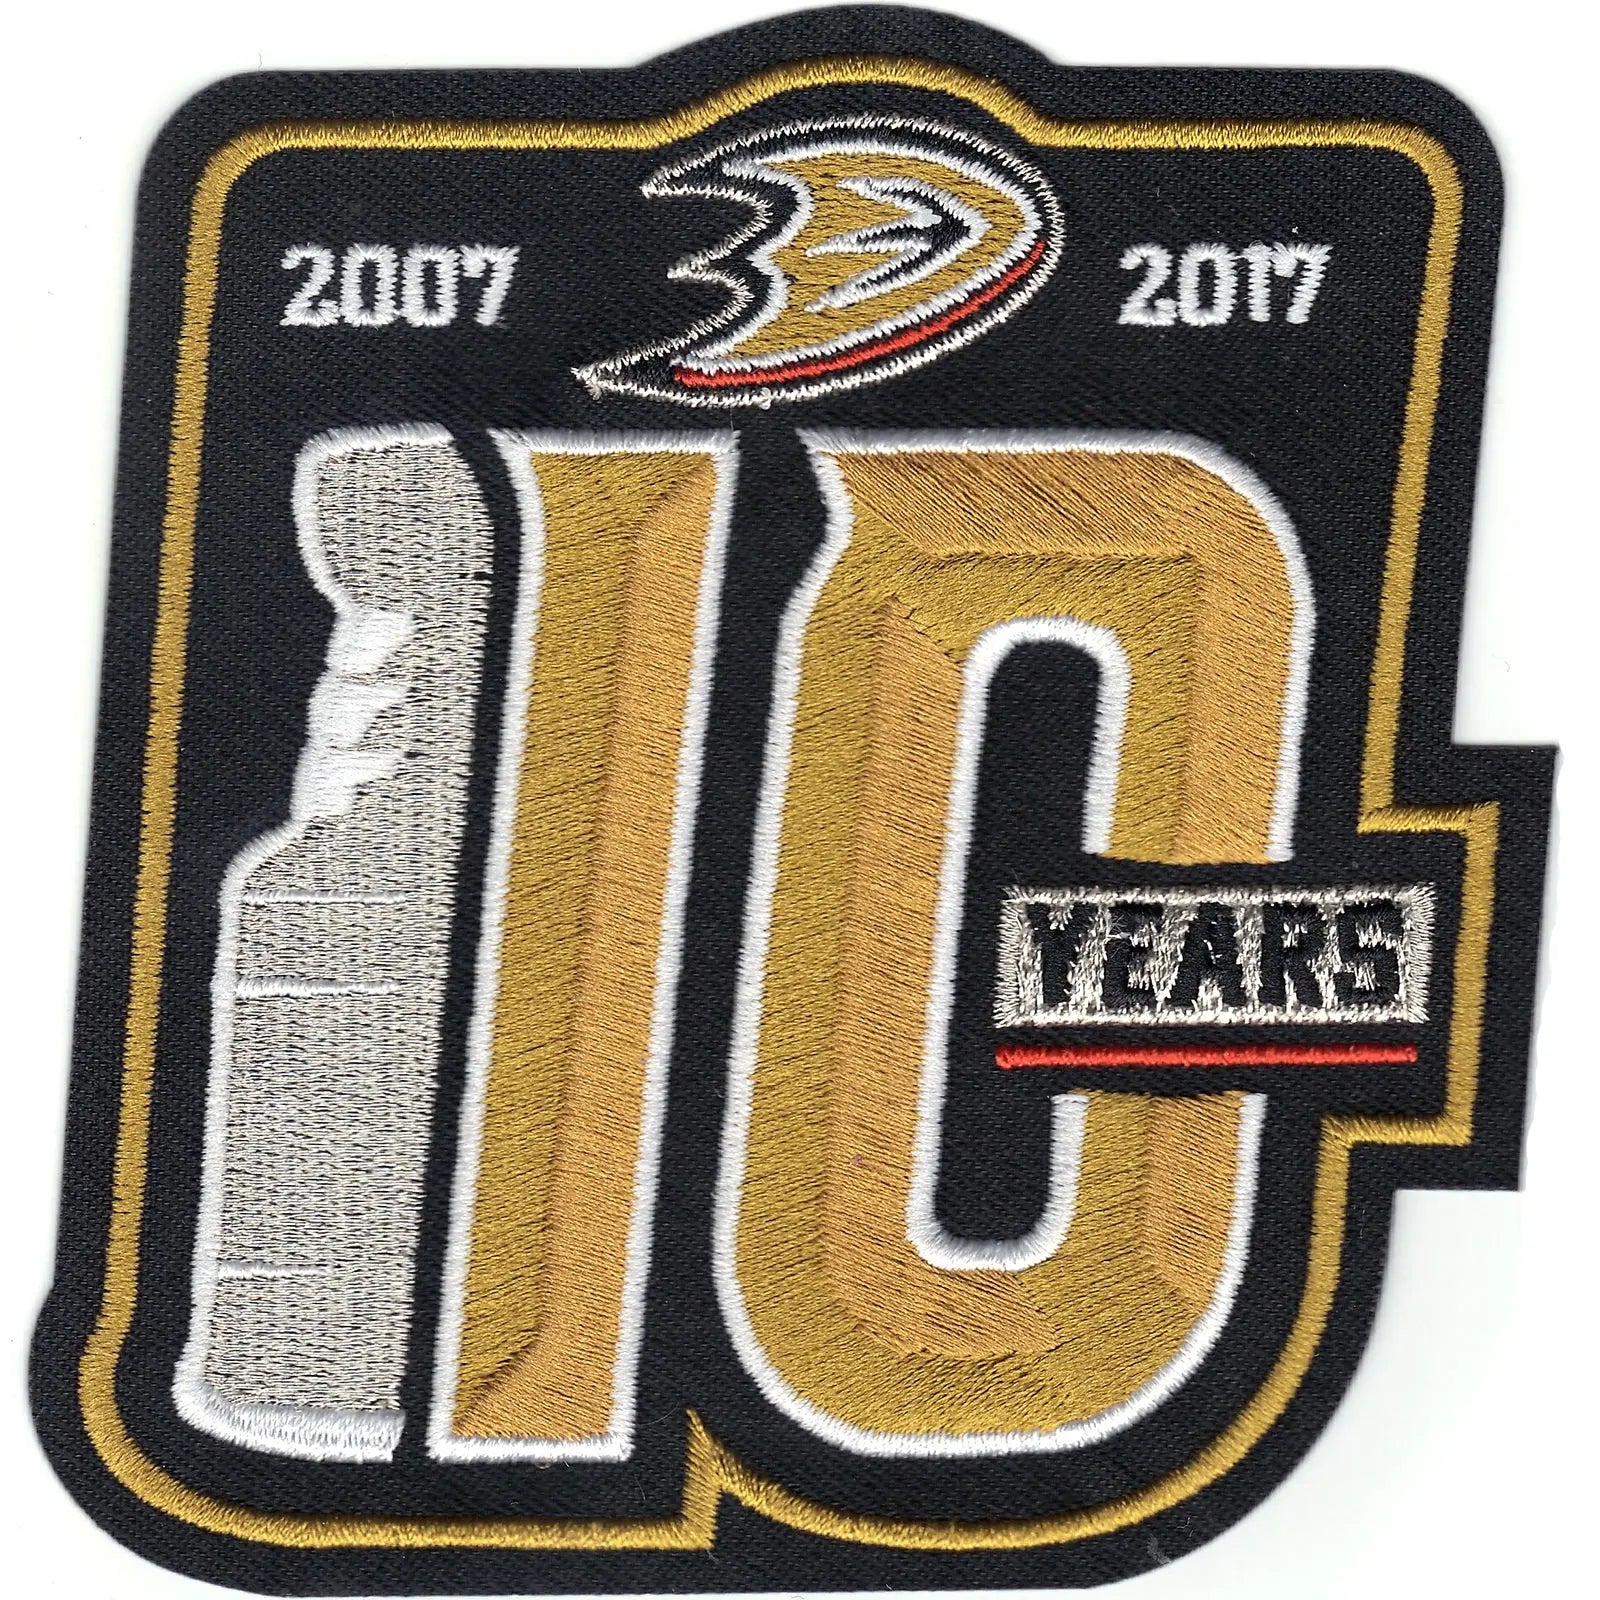 Anaheim Ducks 2007 Stanley Cup Champions 10th Anniversary Patch (2017) 